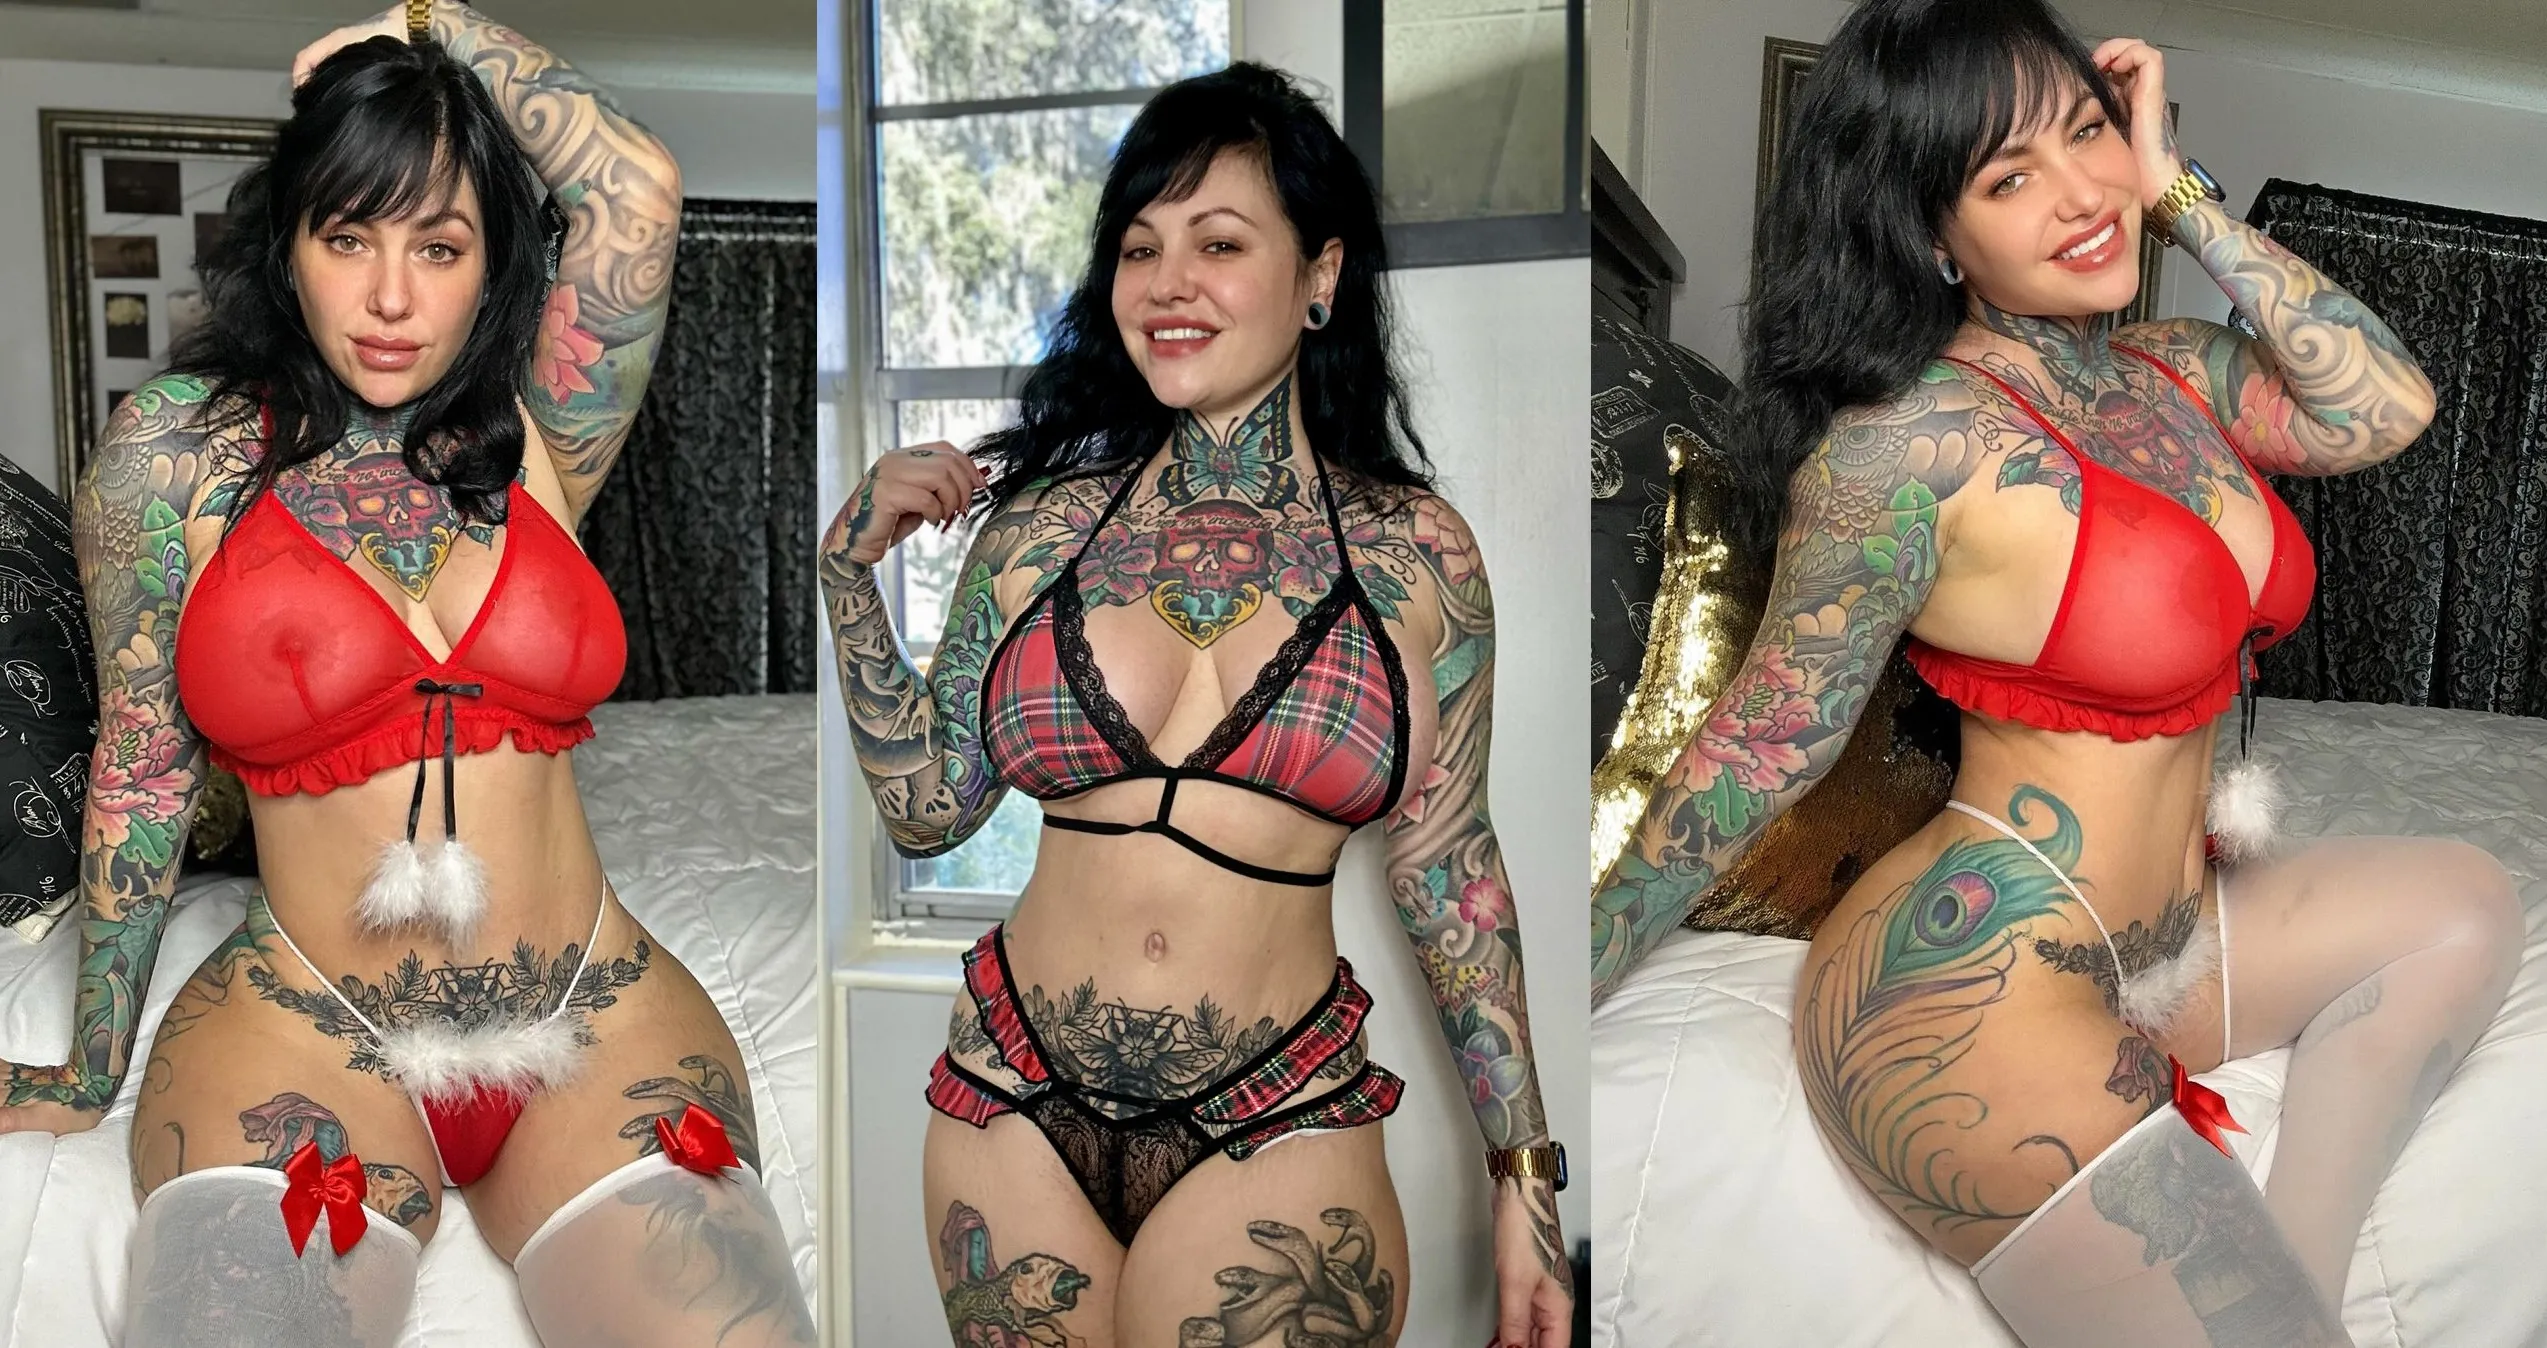 Tattoo model Pandora Blue strips to festive lingerie for fans as Christmas gift - Gossibox.com